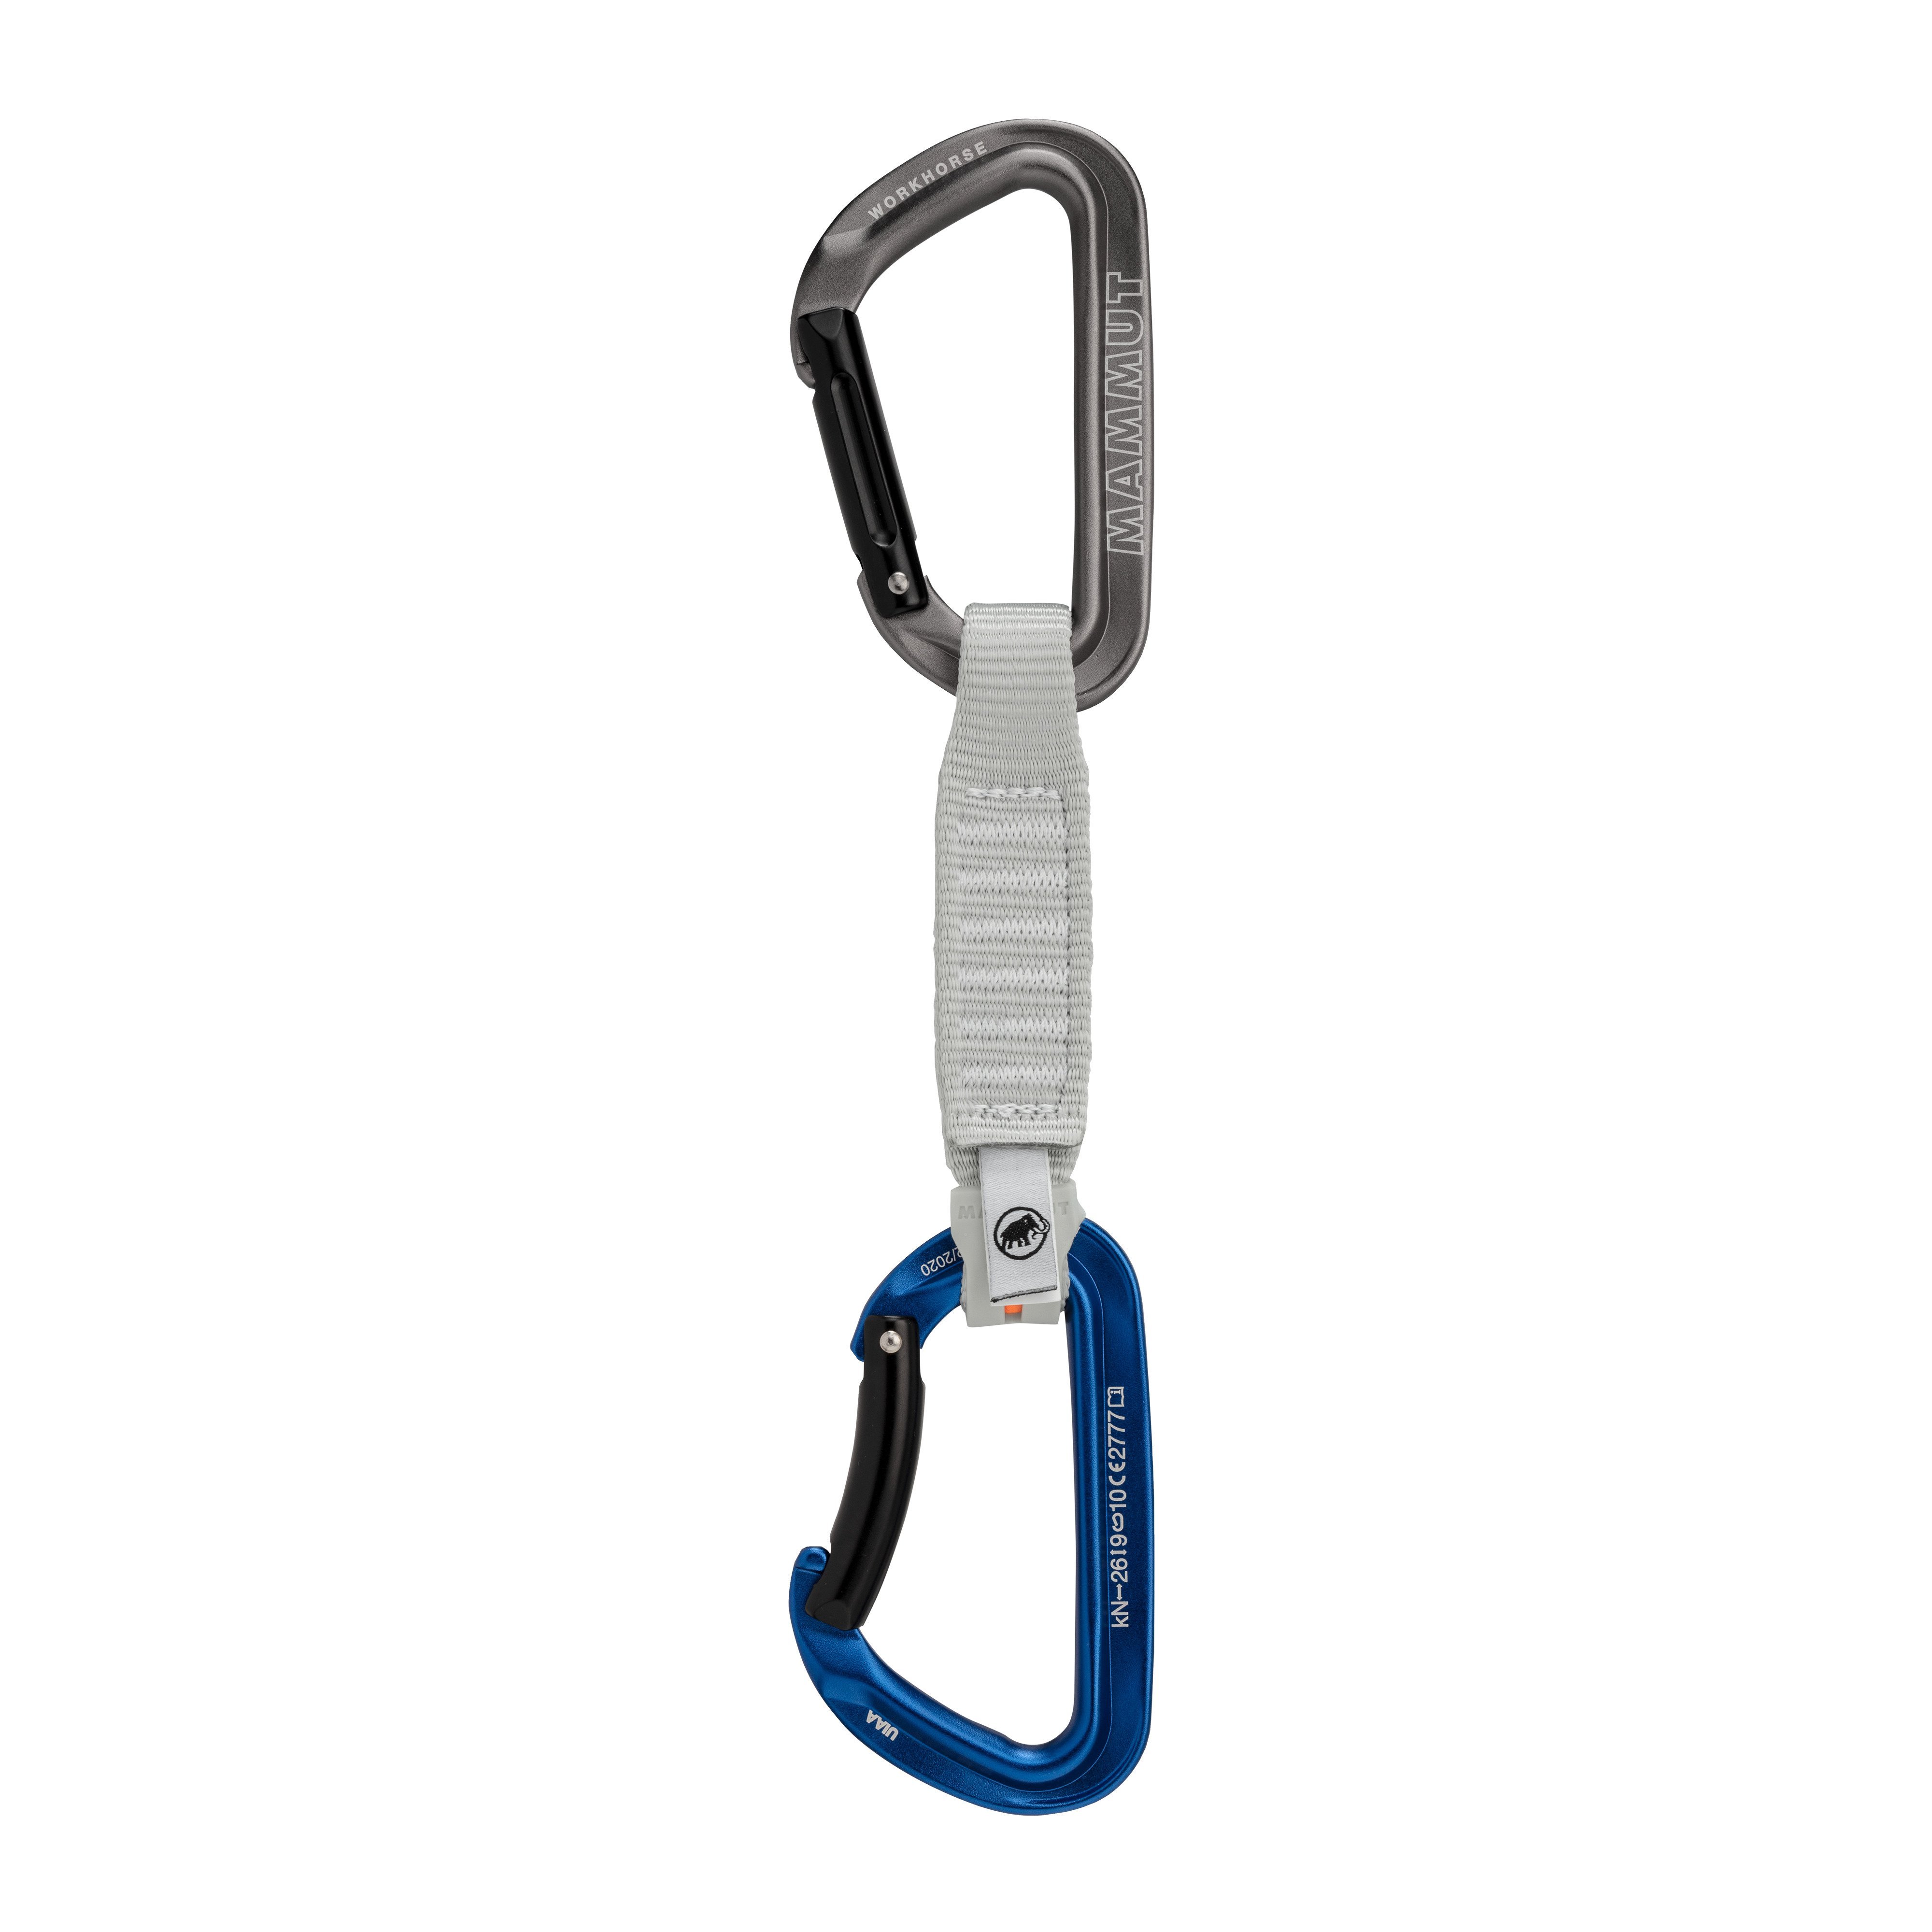 Workhorse Keylock 12 cm Quickdraw - grey-blue, 12 cm product image